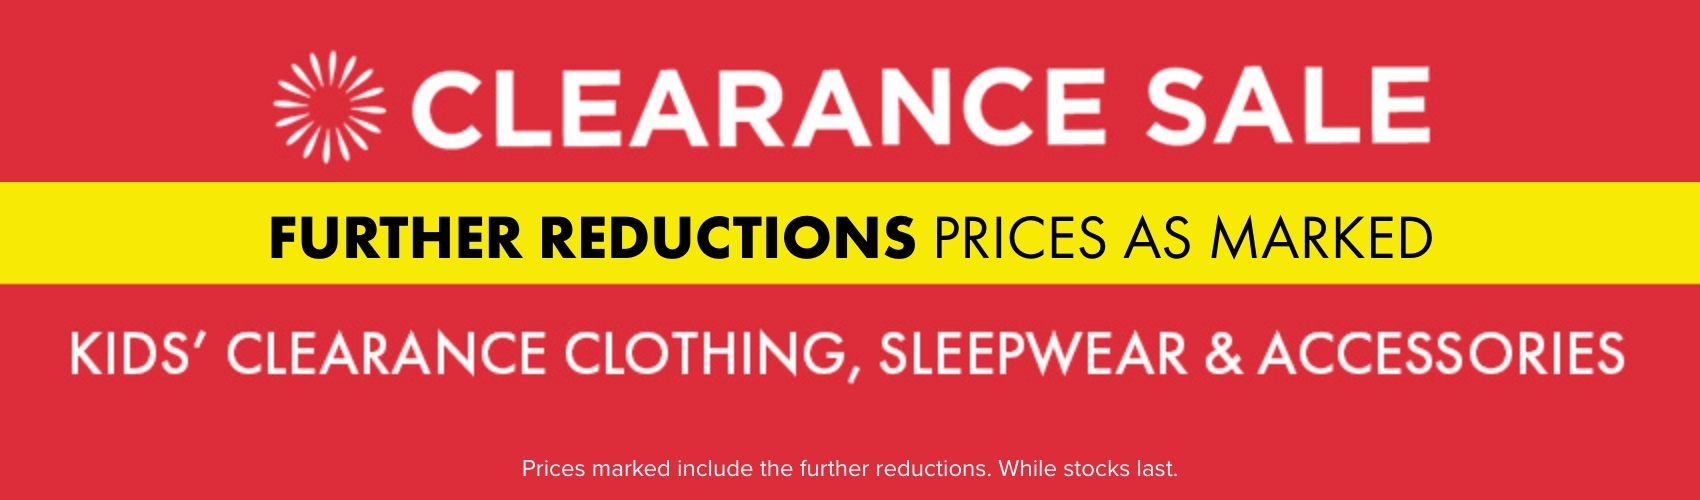 Children's Clearance Sale